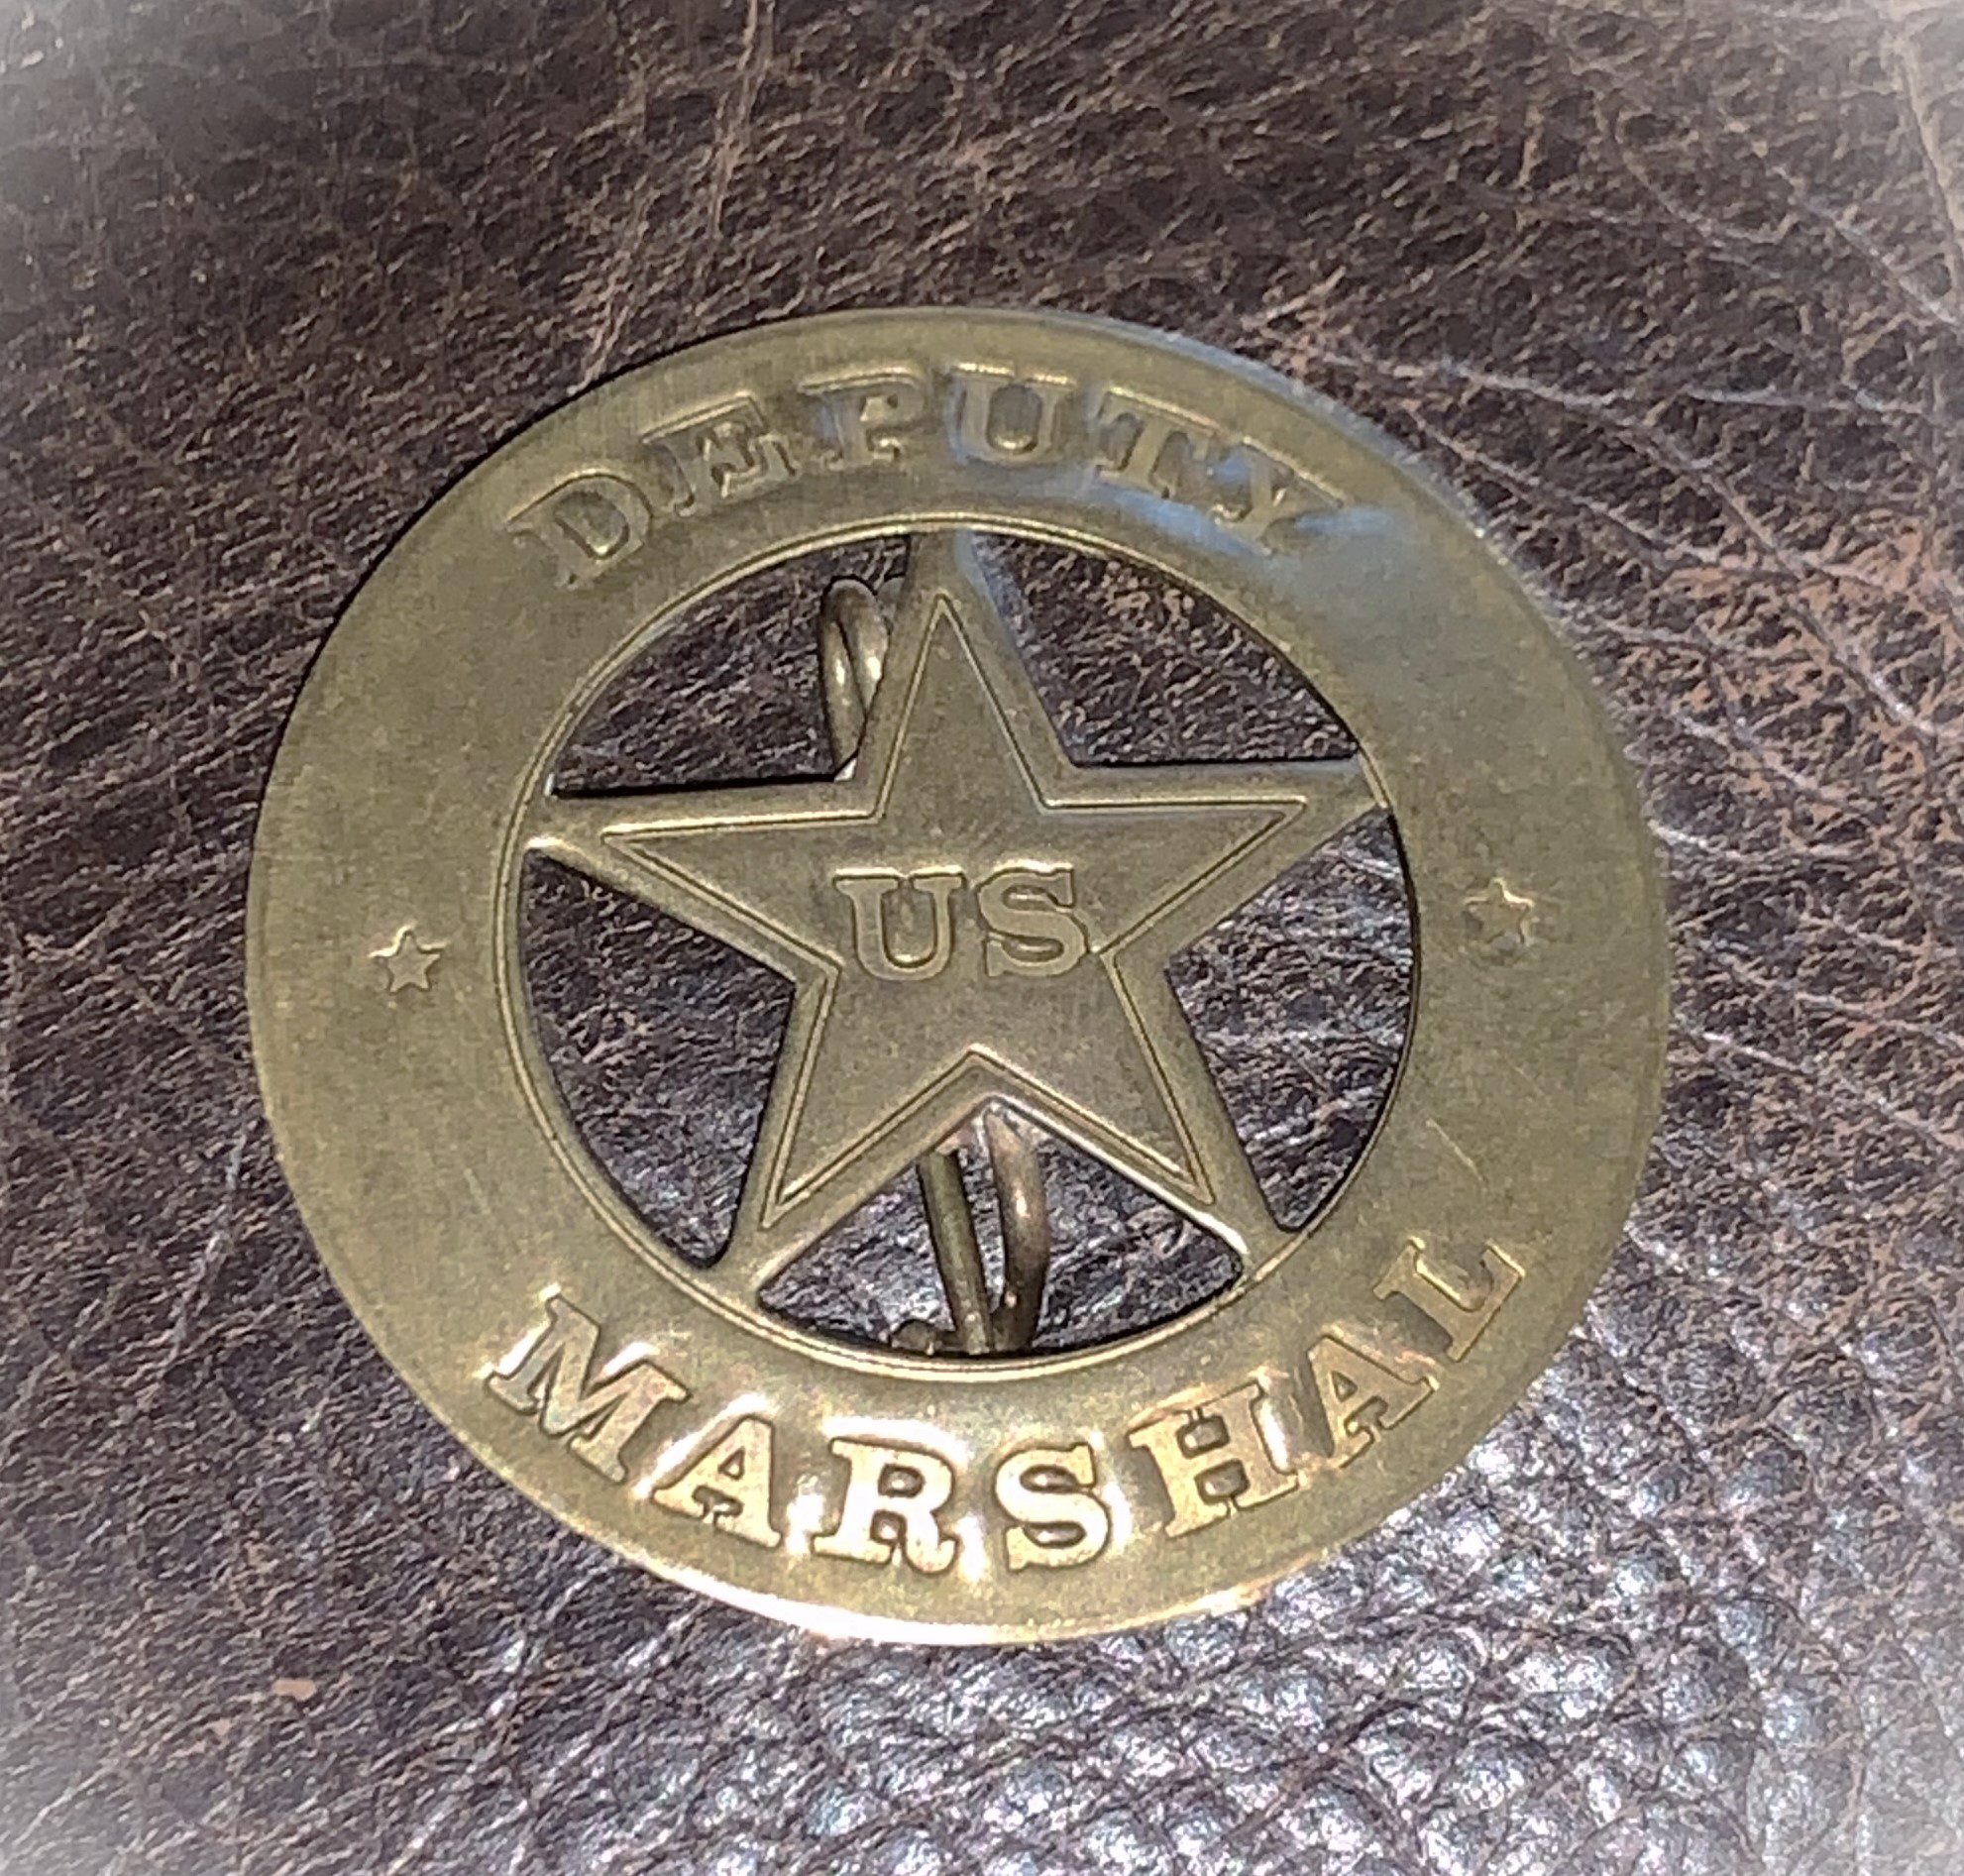 Round Deputy US Marshal Badge